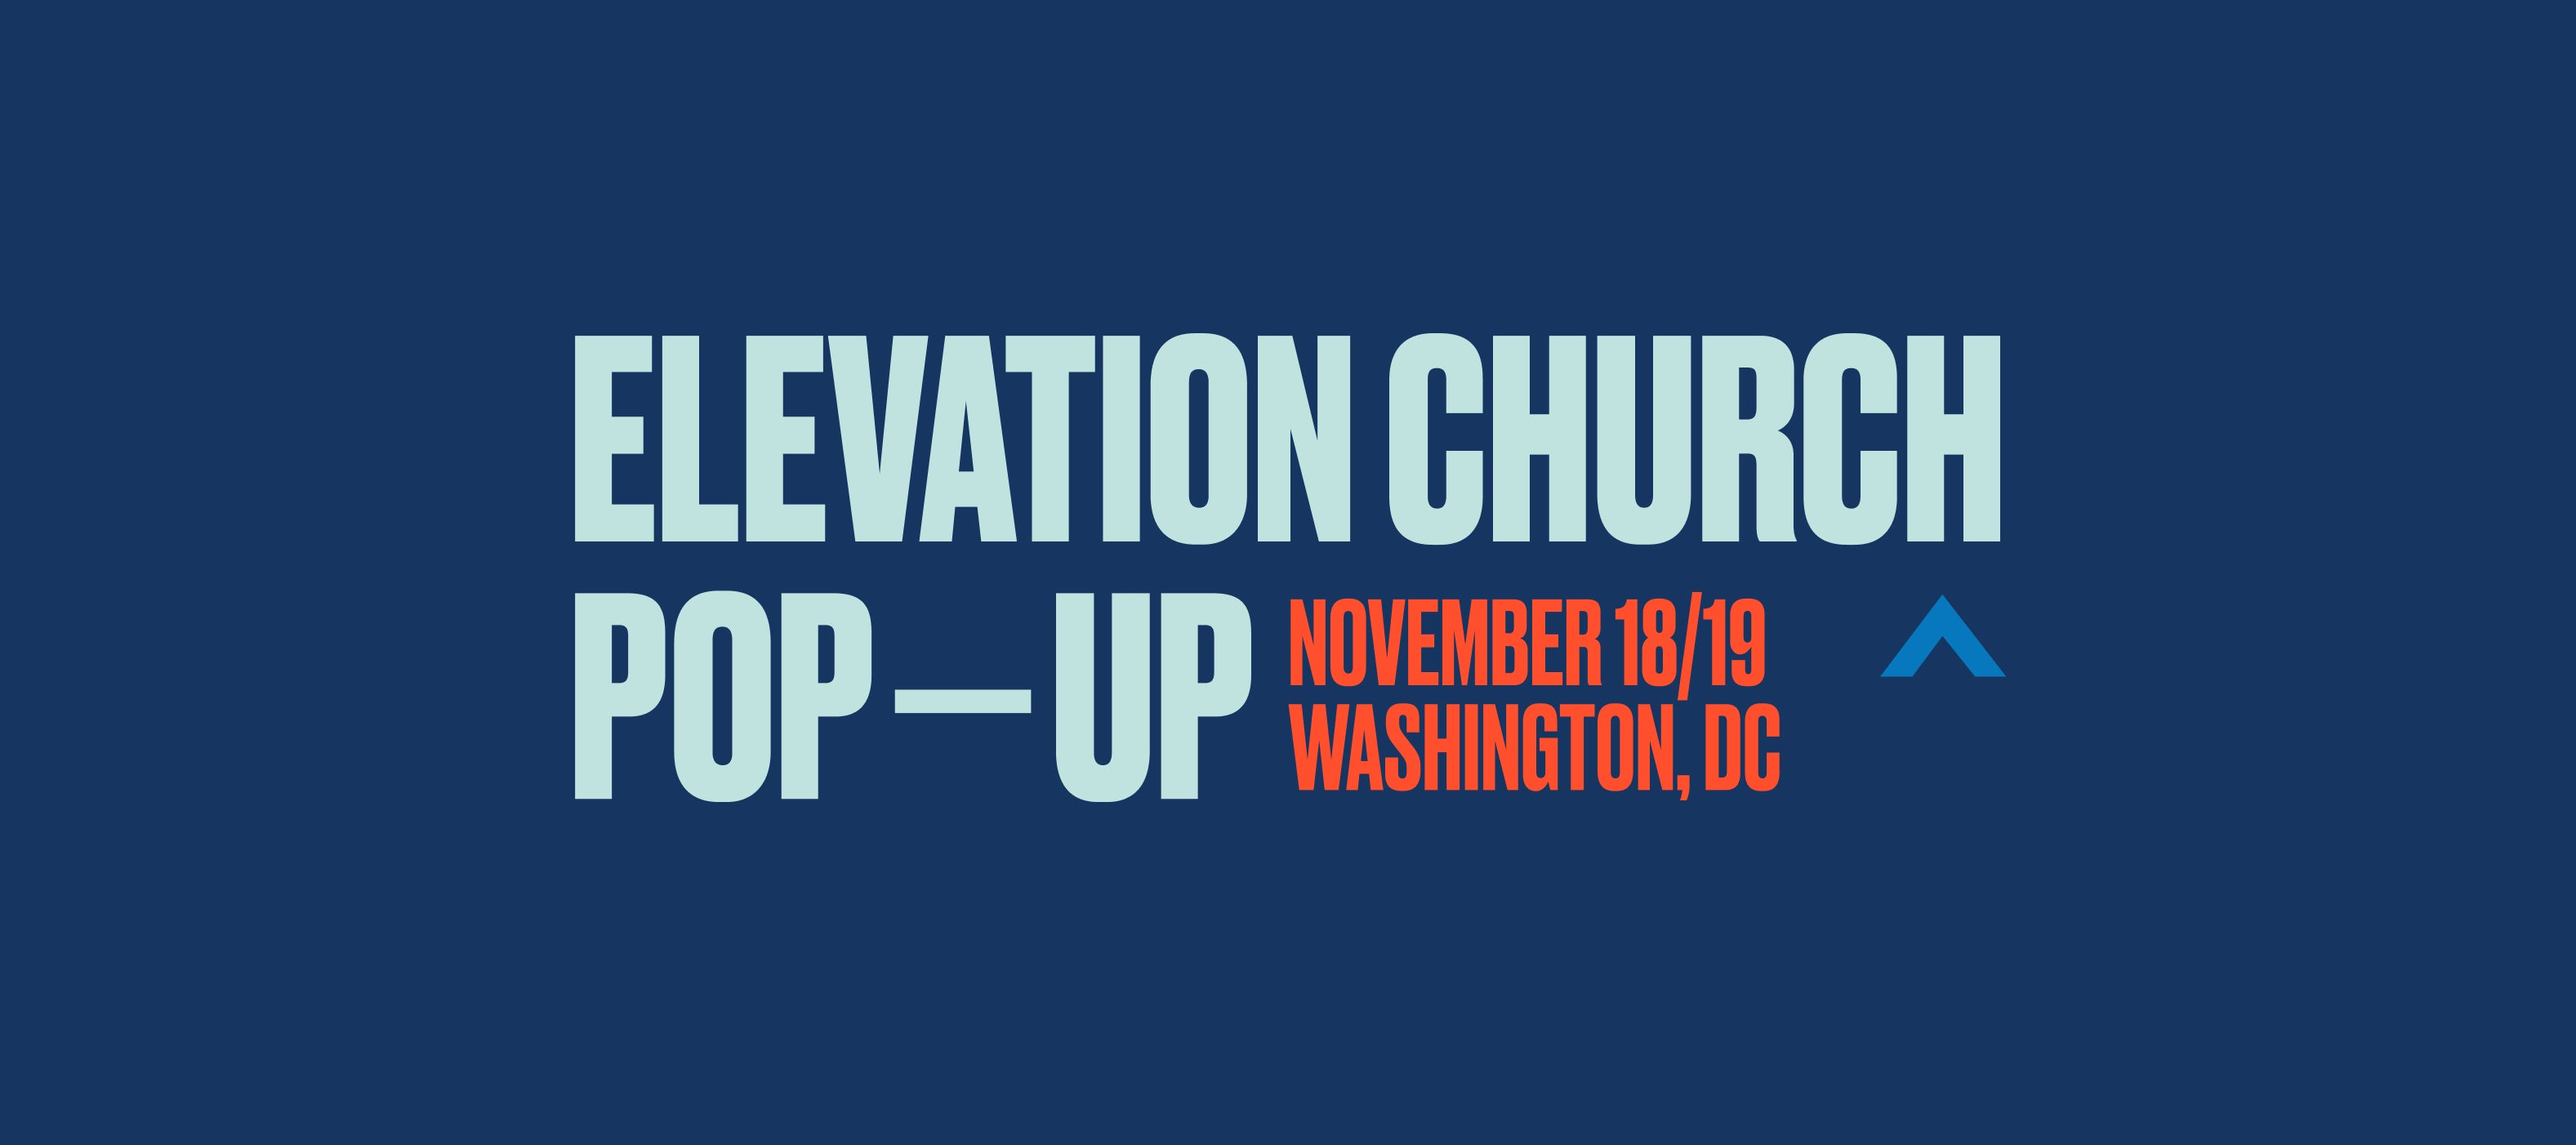 Elevation Church Washington DC Pop-Up November 18/19